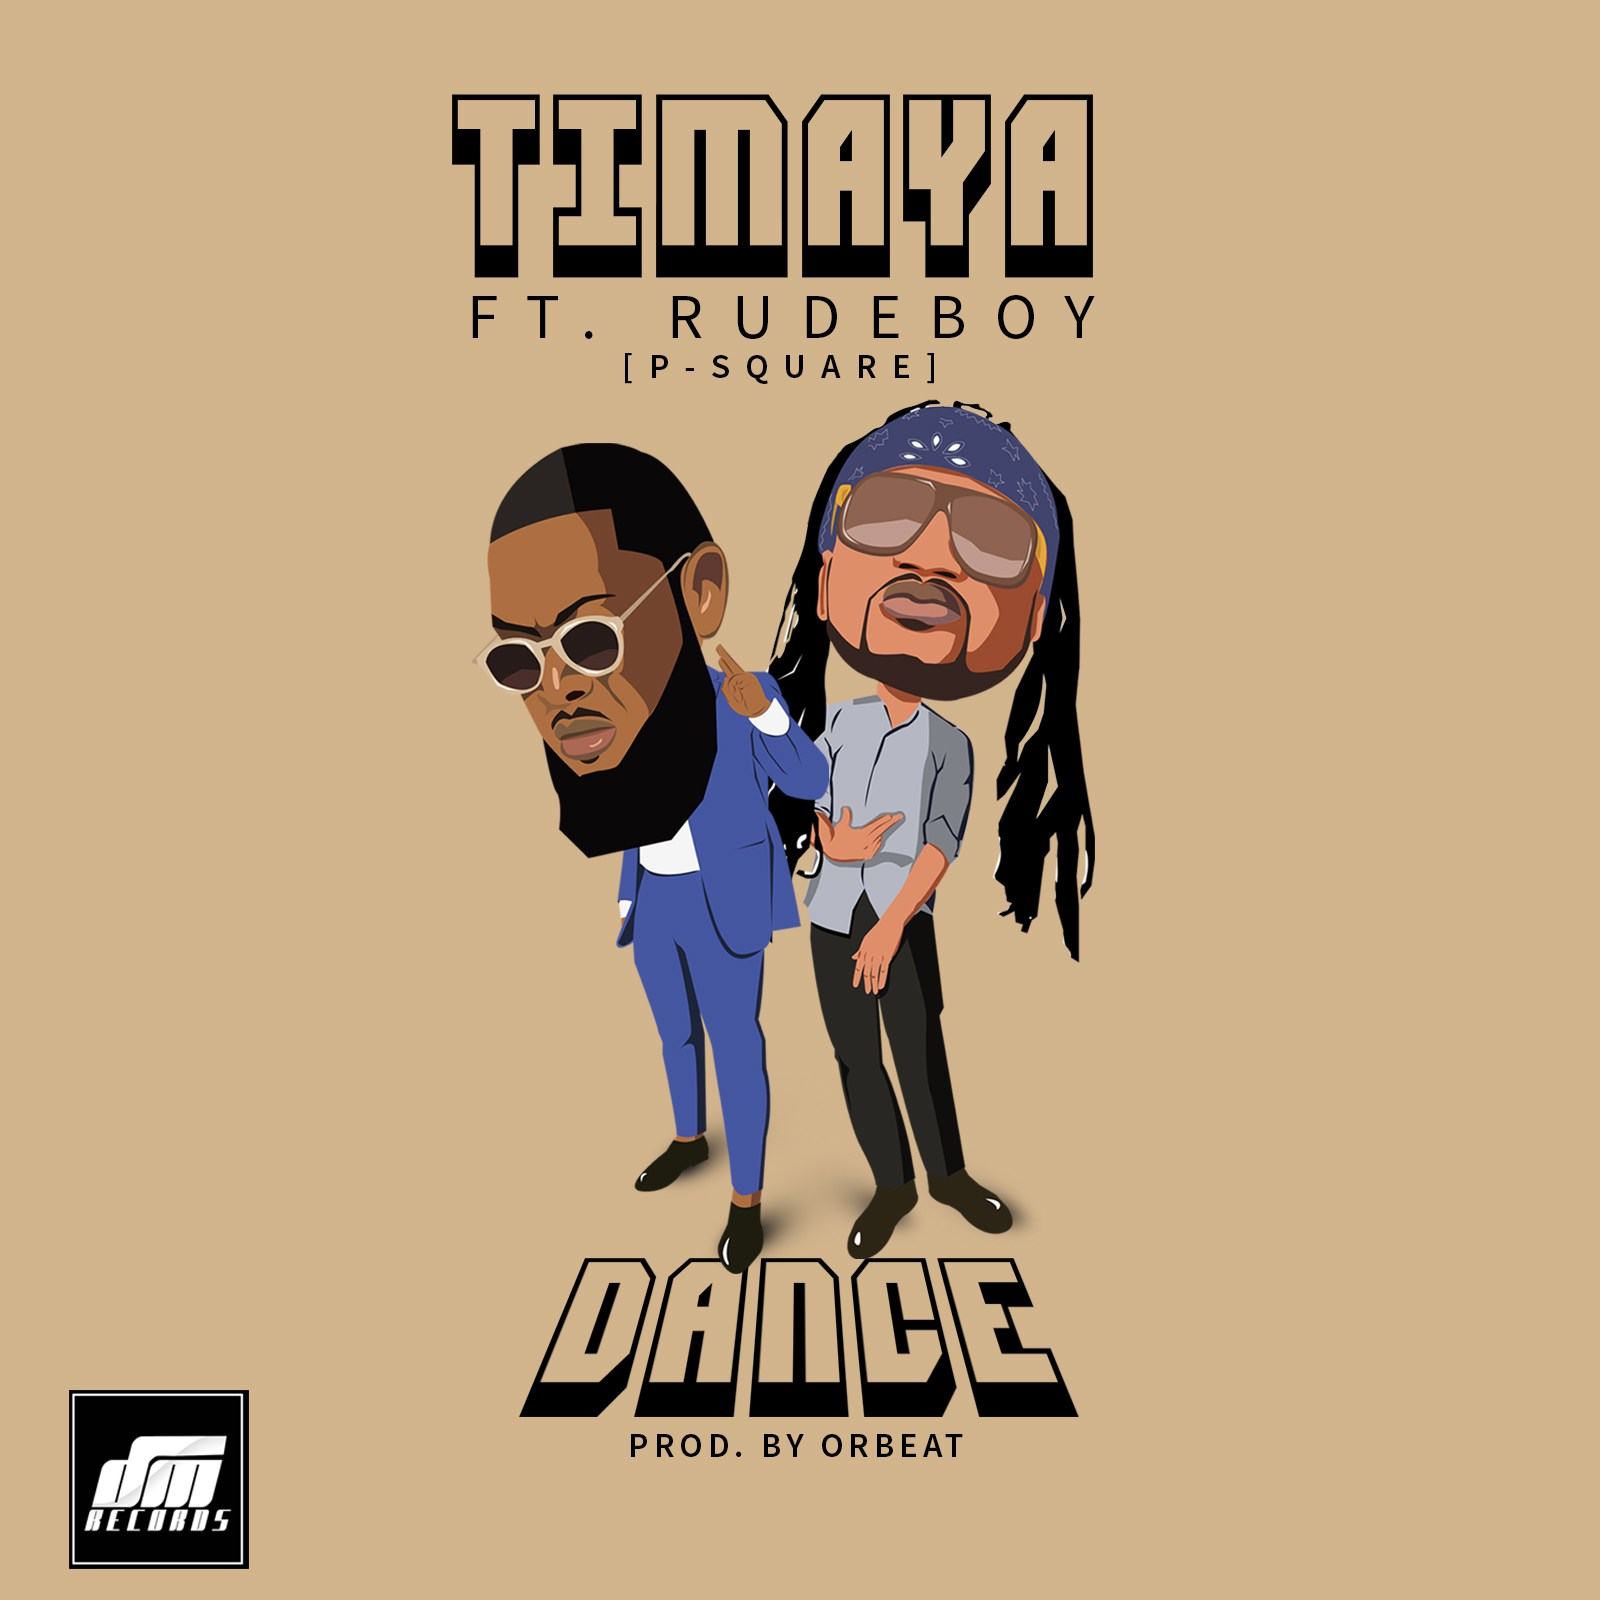 Timaya - Dance ft Rudeboy (P-Square)